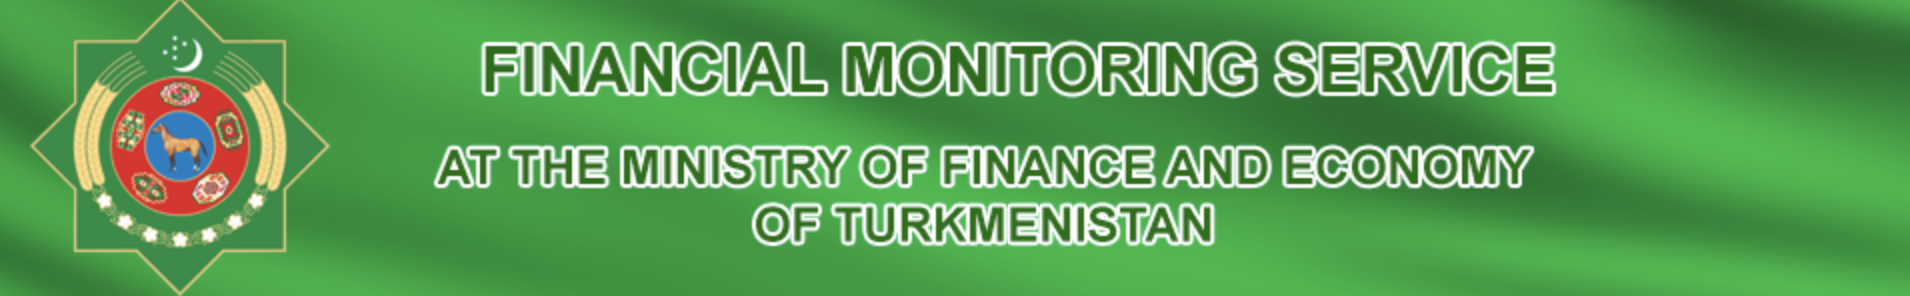 Kementerian Keuangan logo turkmenistan